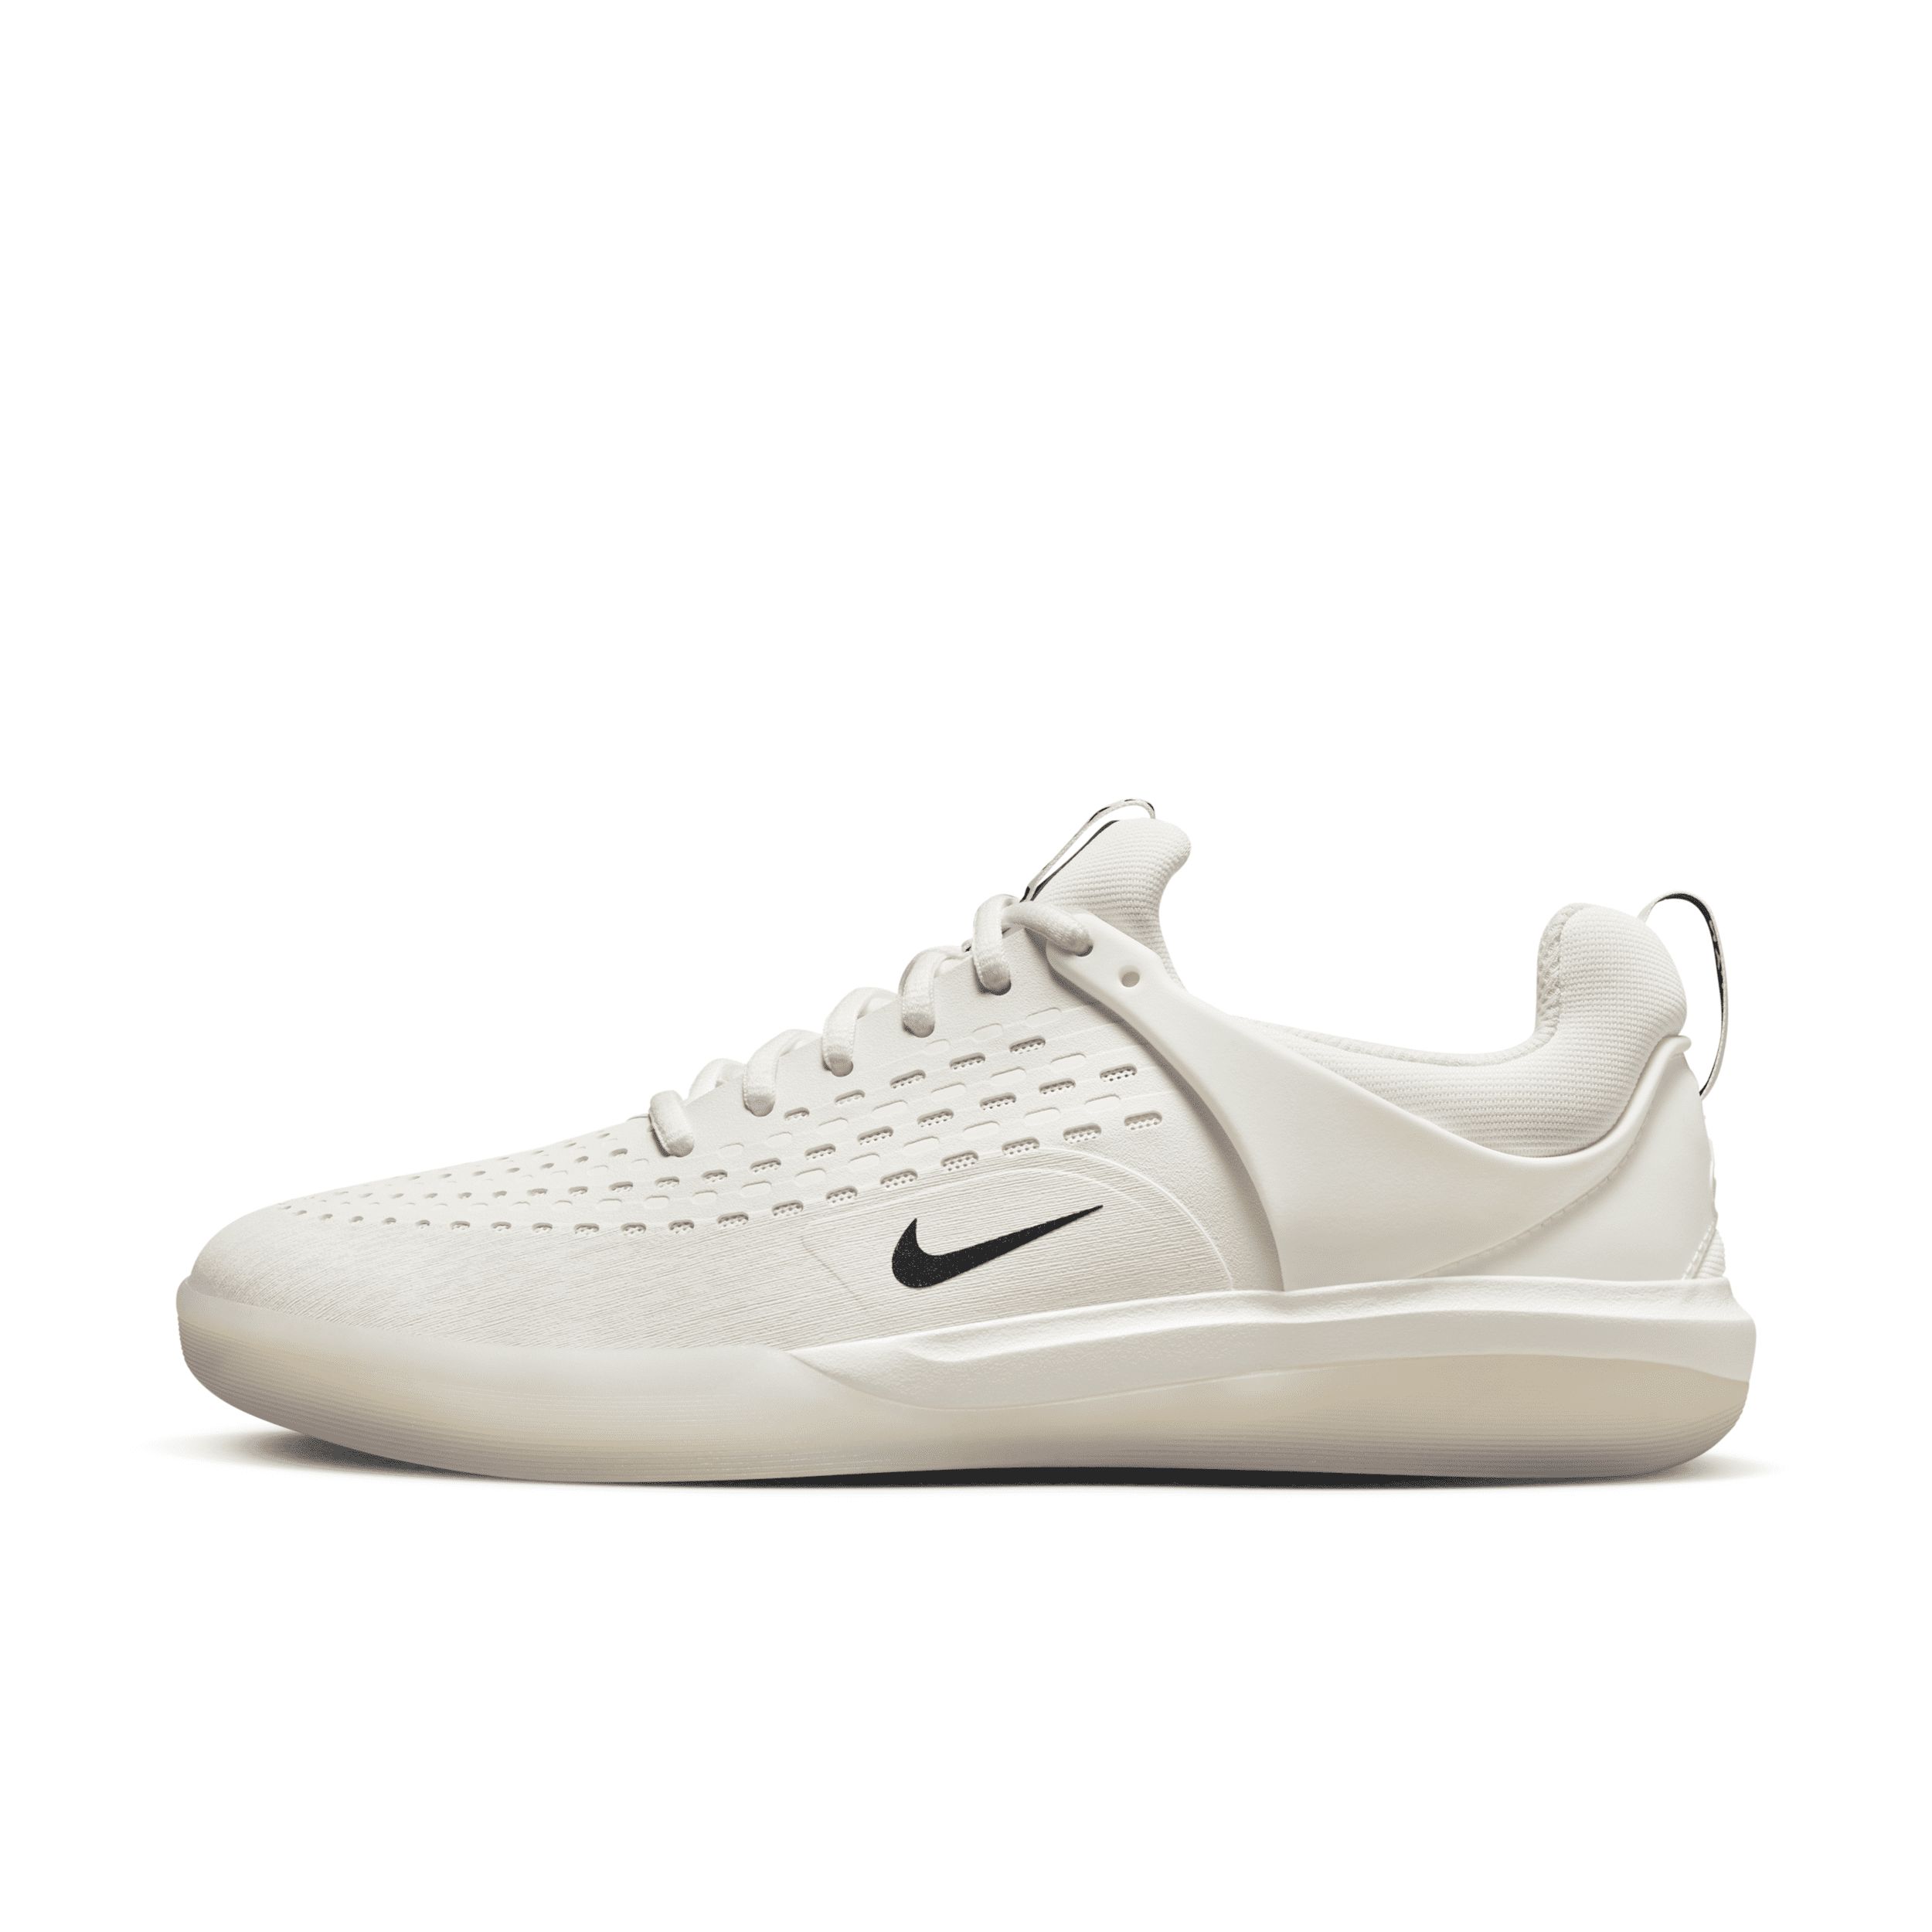 Men's Nike SB Nyjah 3 Skate Shoes in White, Size: 8 | DJ6130-100 | Nike (US)